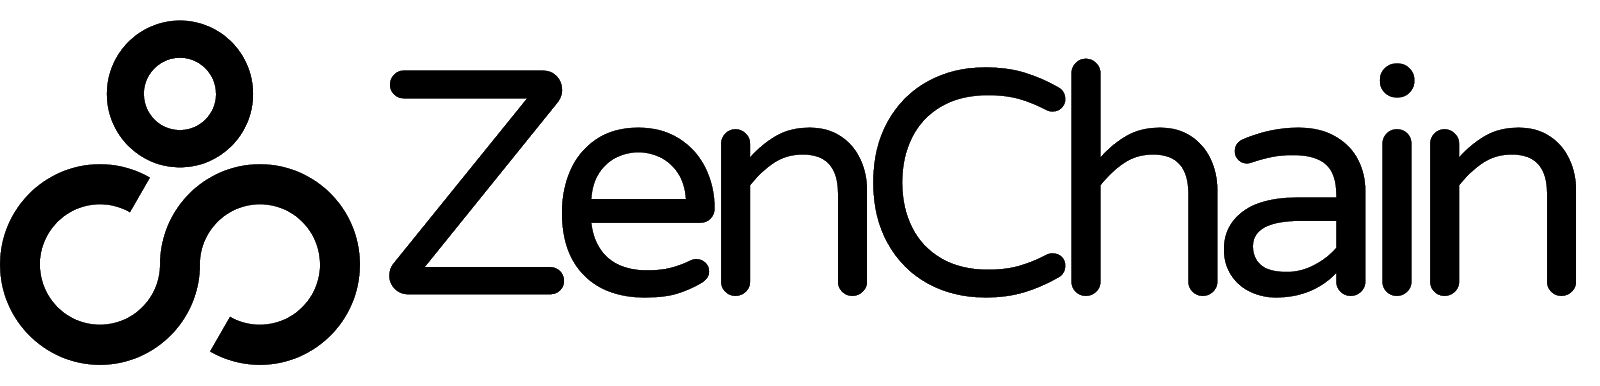 ZenChain-Logo-Text-Black@2x.png